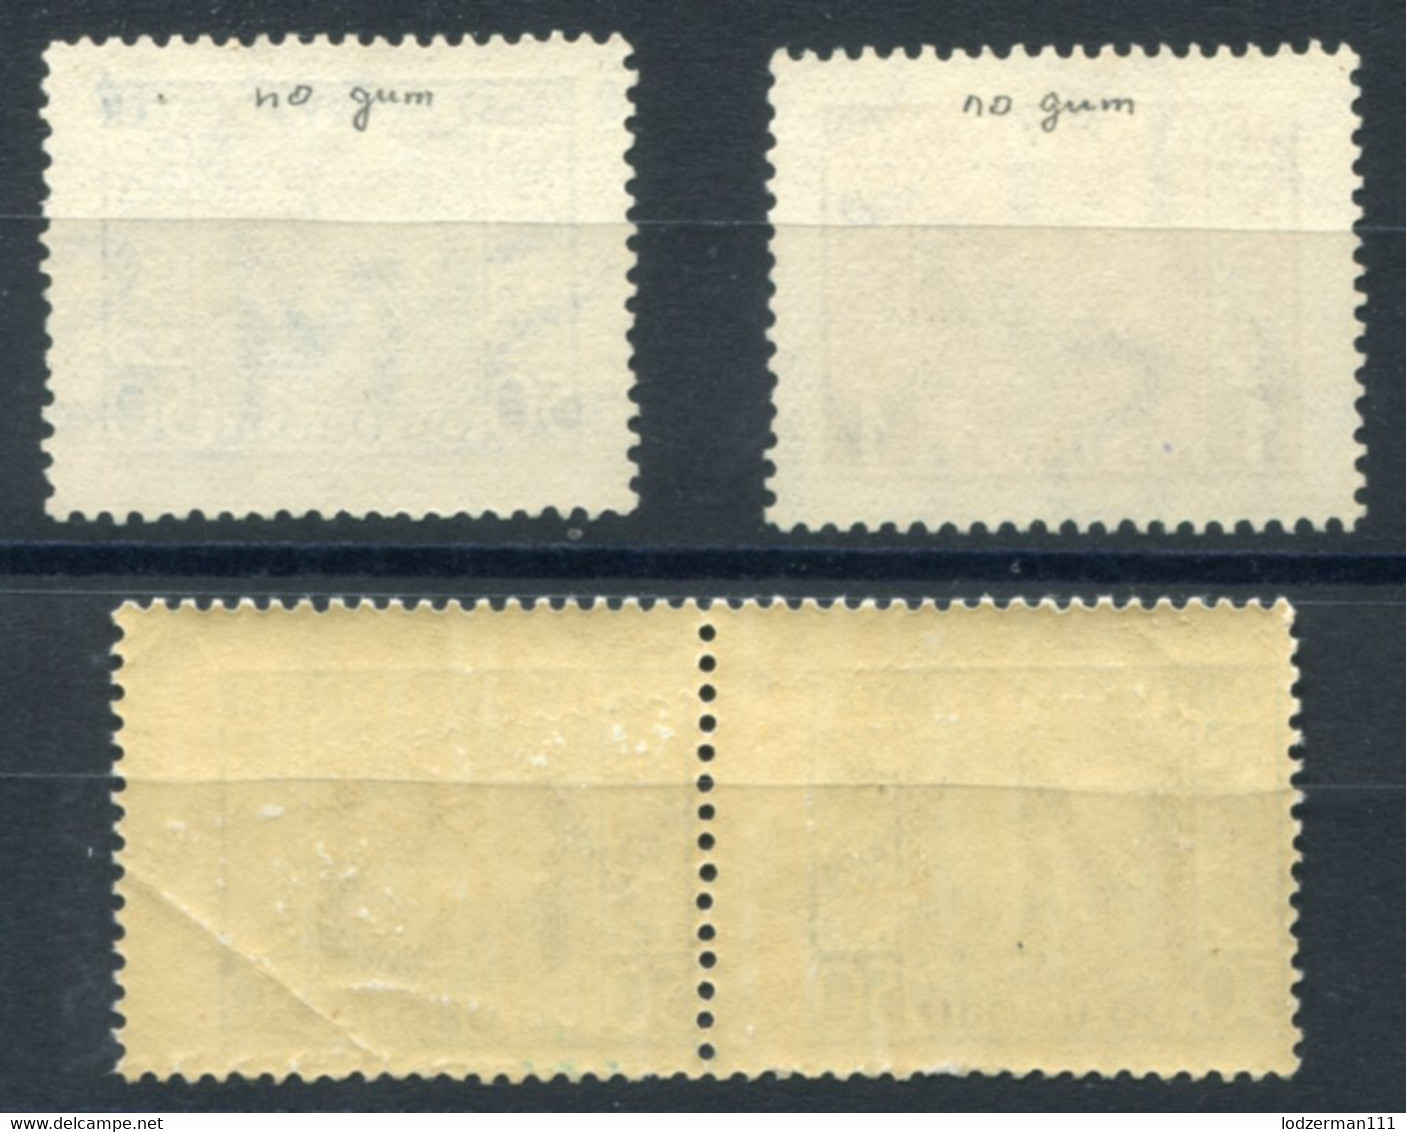 1937 Abattoir Tax (OD UBOJU) - 2 MNG Stamps And Pair (MNH) Rare - Steuermarken